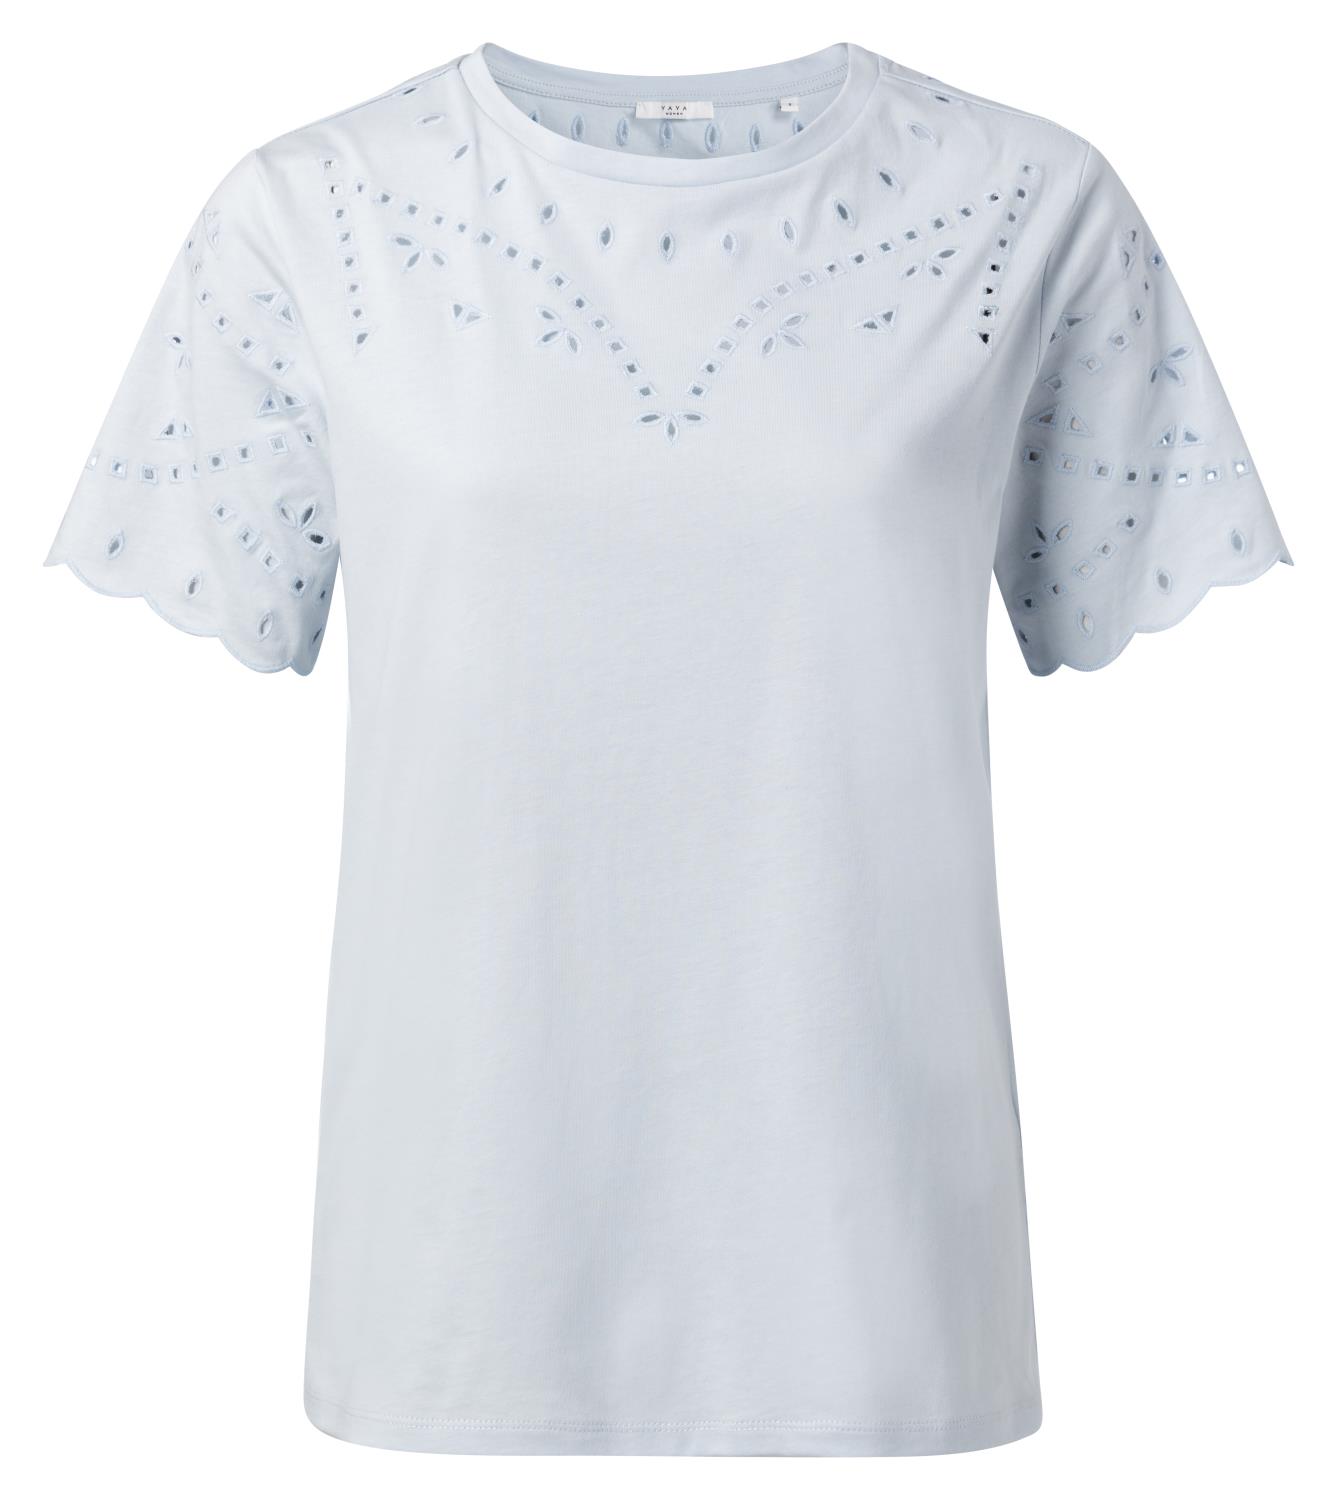 Cotton t-shirt broiderie anglaise 1919136-014 YAYA